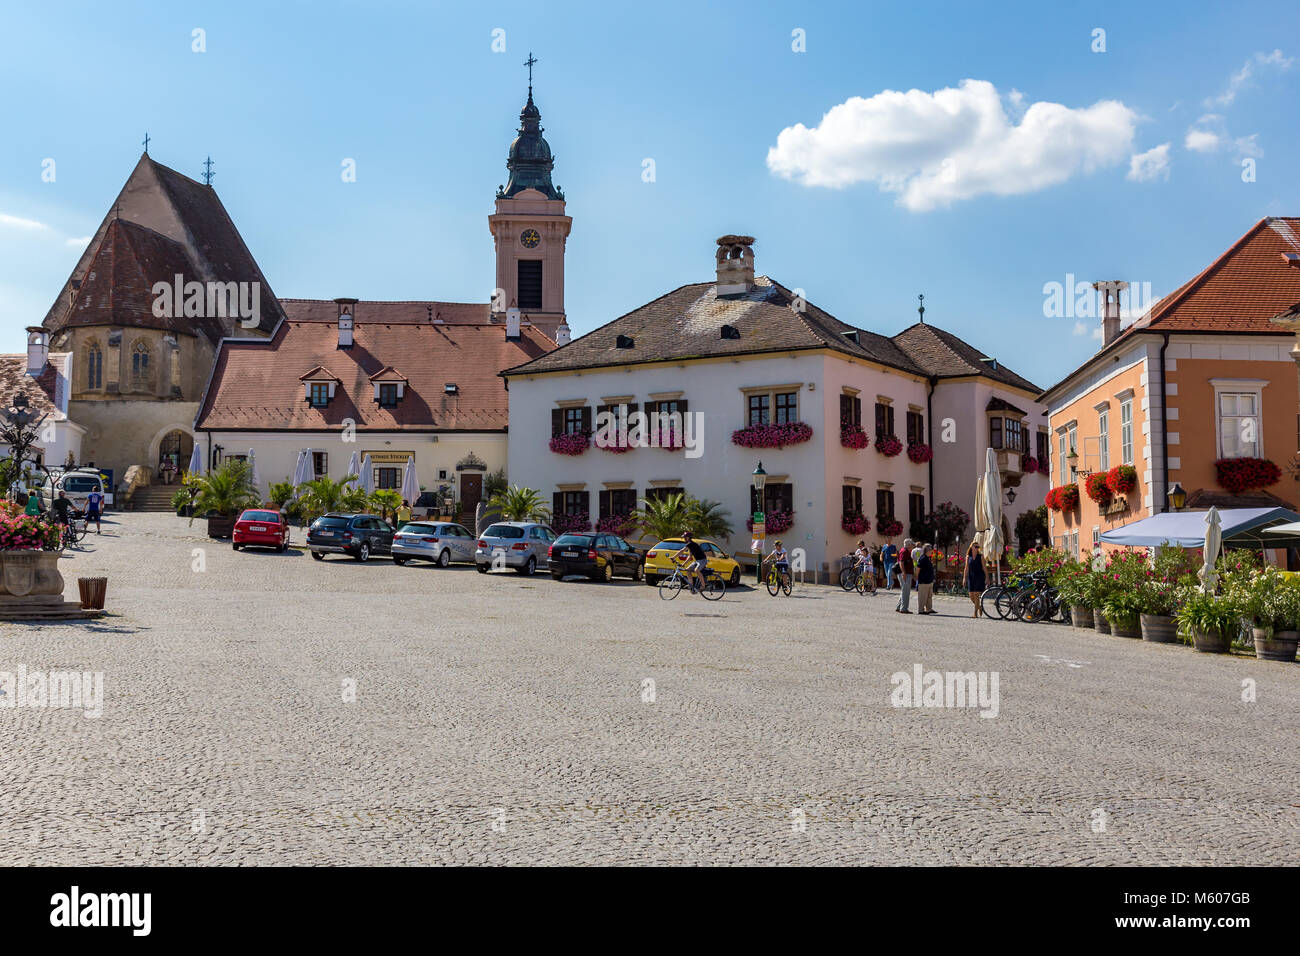 Very nice village in Austria, Rust Stock Photo